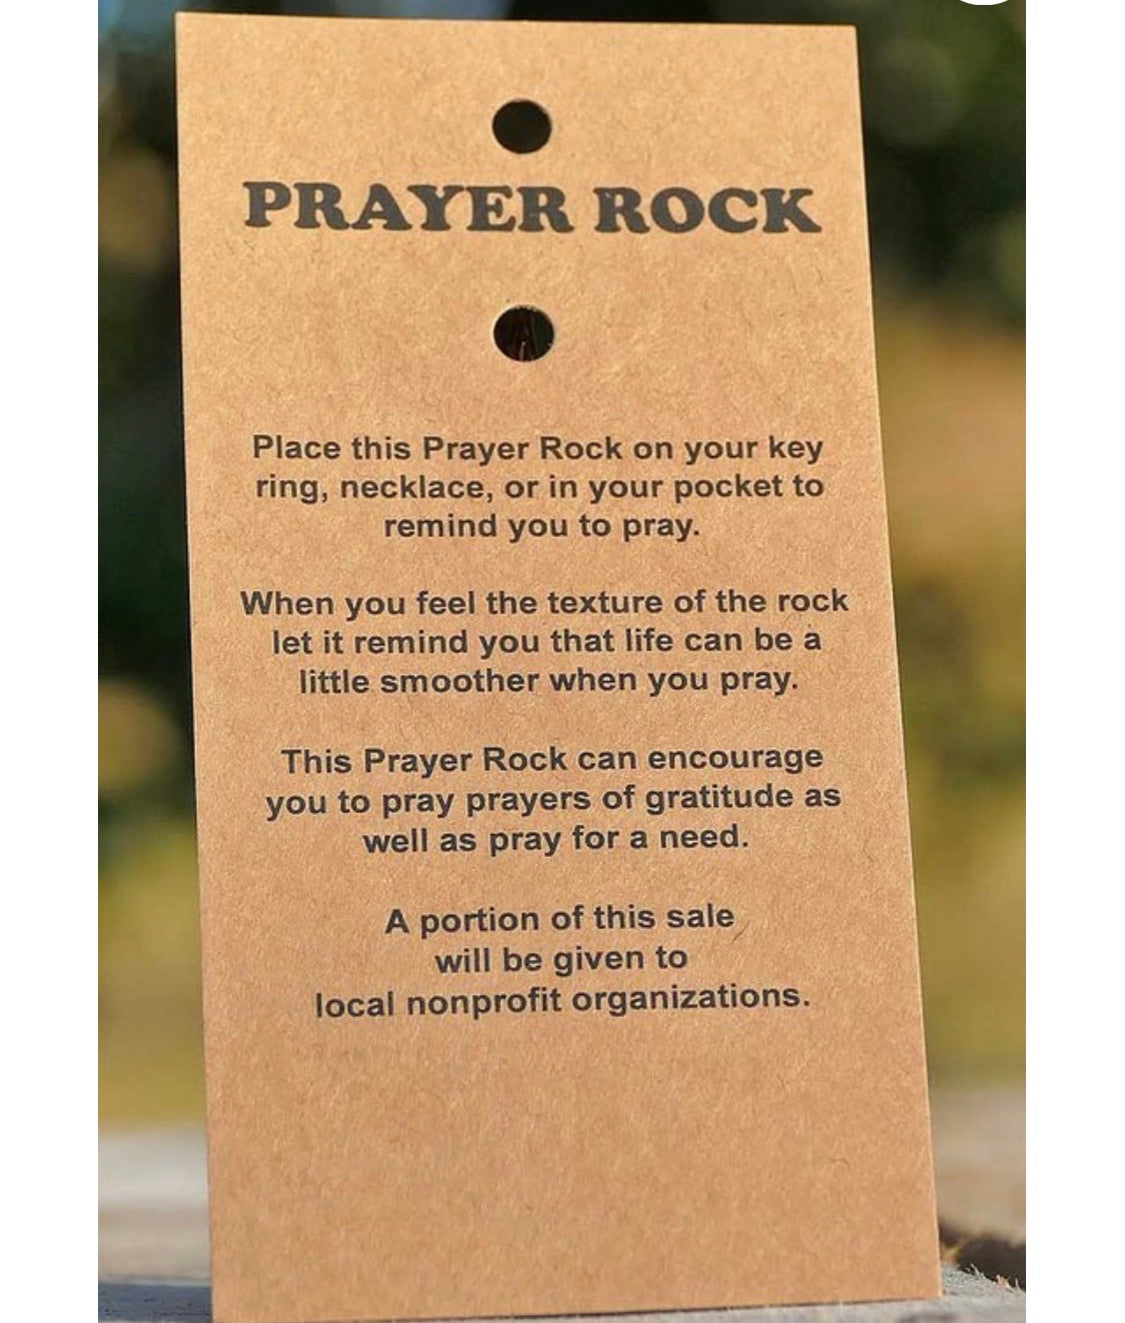 Prayer Rocks